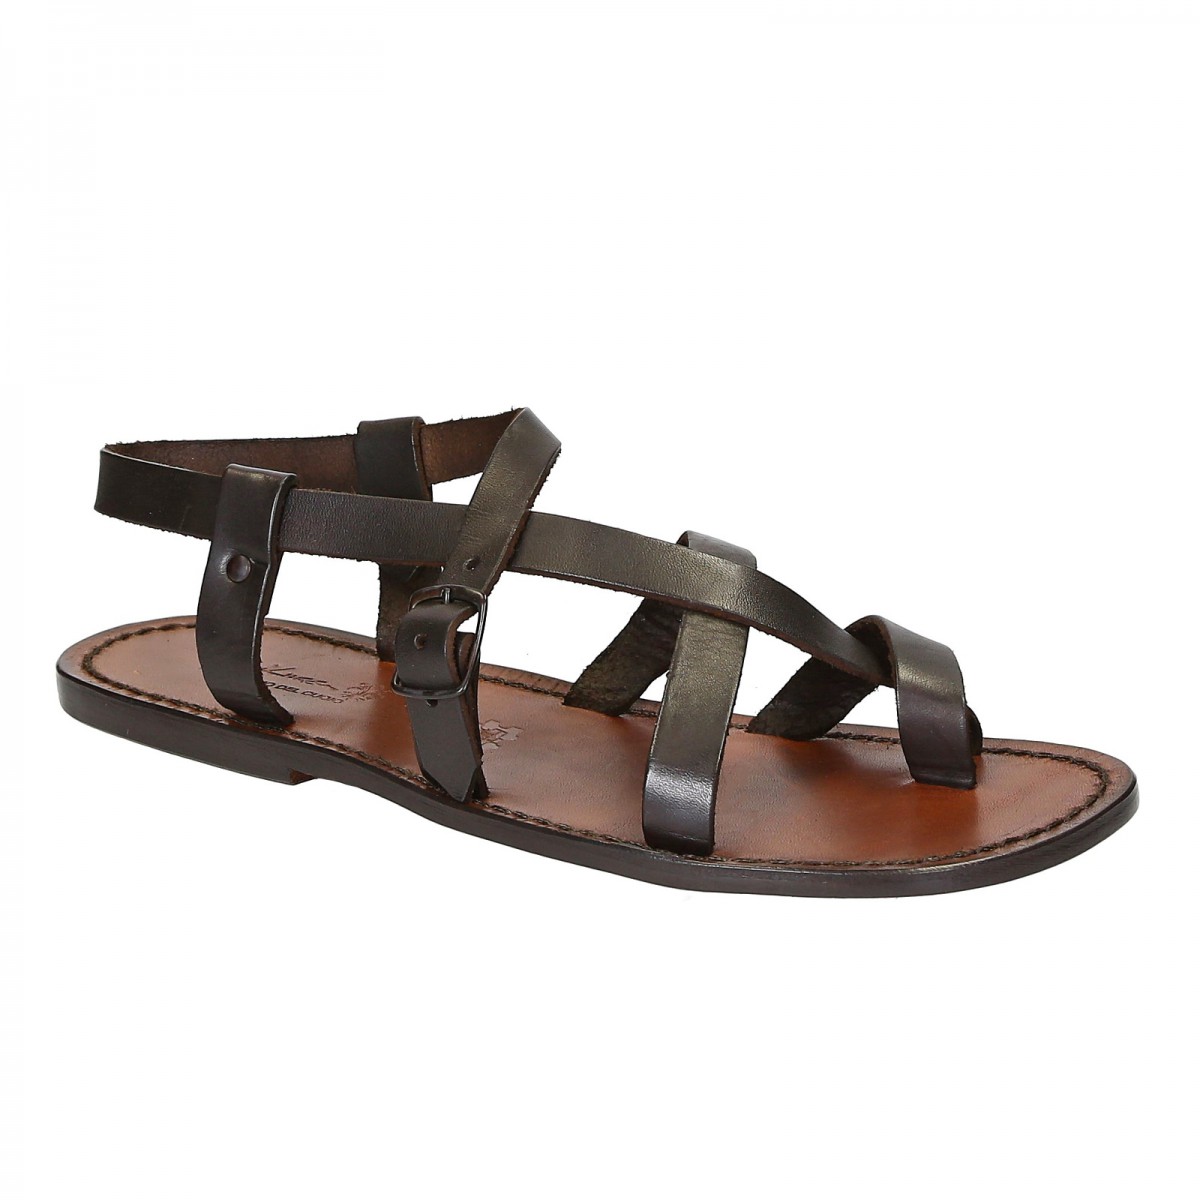 Handmade men's sandals in dark brown leather | Gianluca - The leather ...